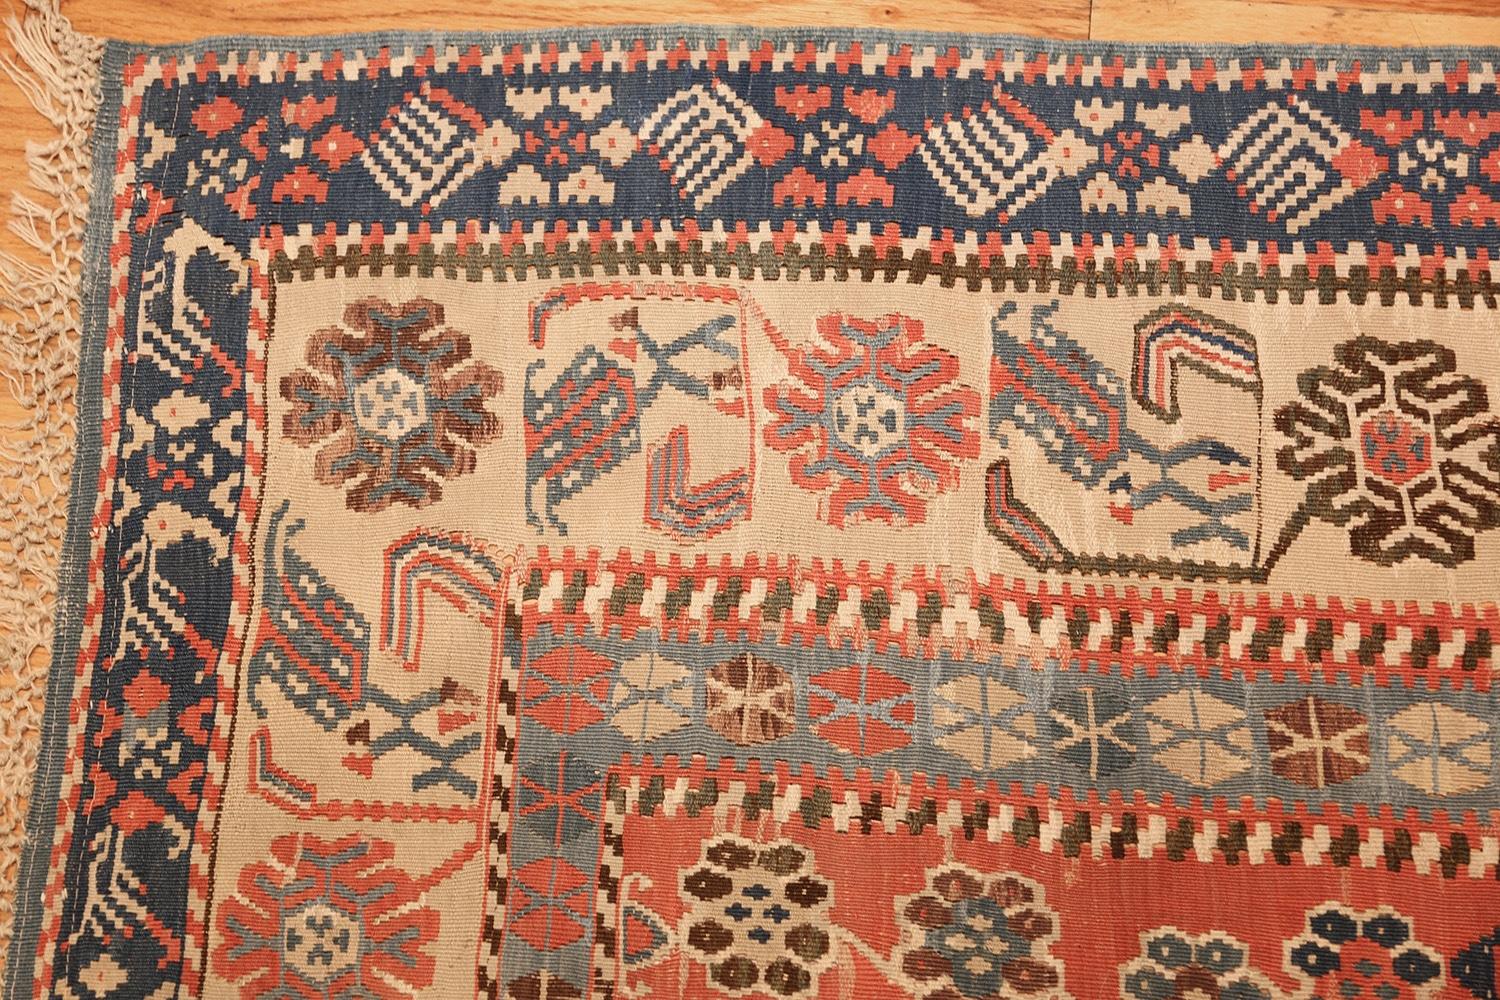 Wool Antique Turkish Prayer Design Kilim Rug. Size: 4 ft 3 in x 5 ft 4 in